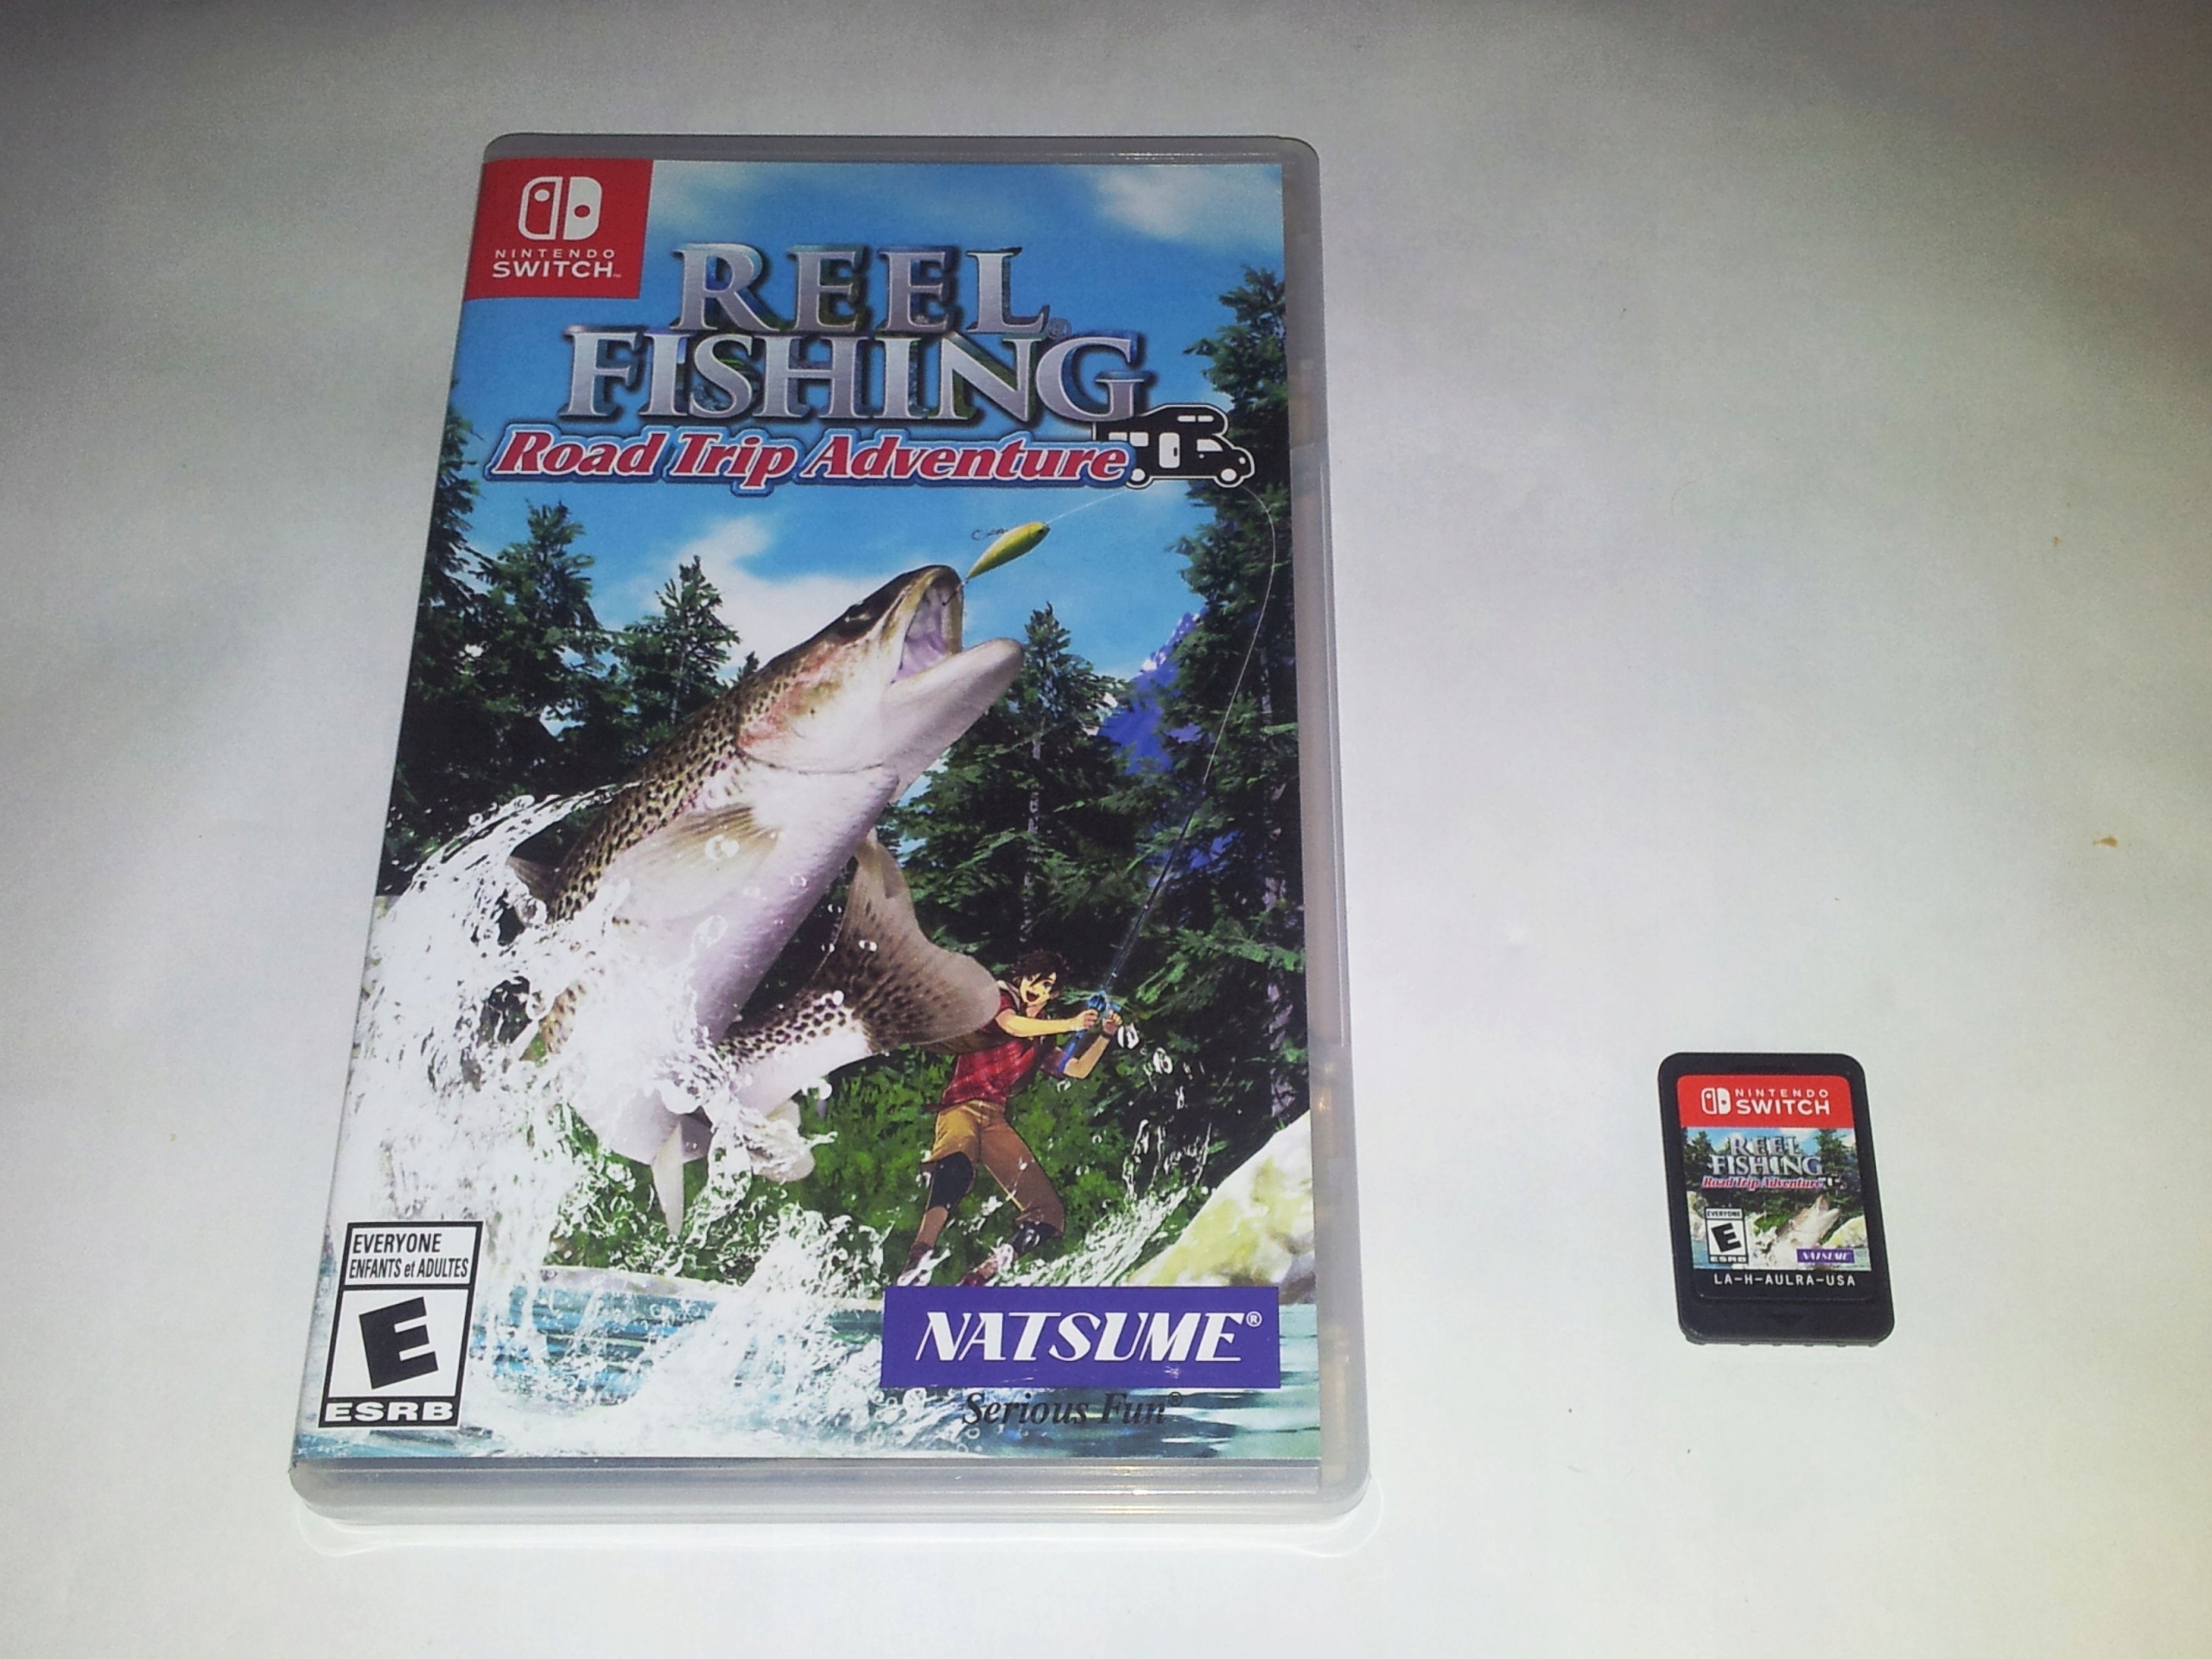 https://a.allegroimg.com/original/11caeb/66fff33349009172f60ee566232e/Reel-Fishing-Road-Trip-Adventure-Nintendo-Switch-Unikat